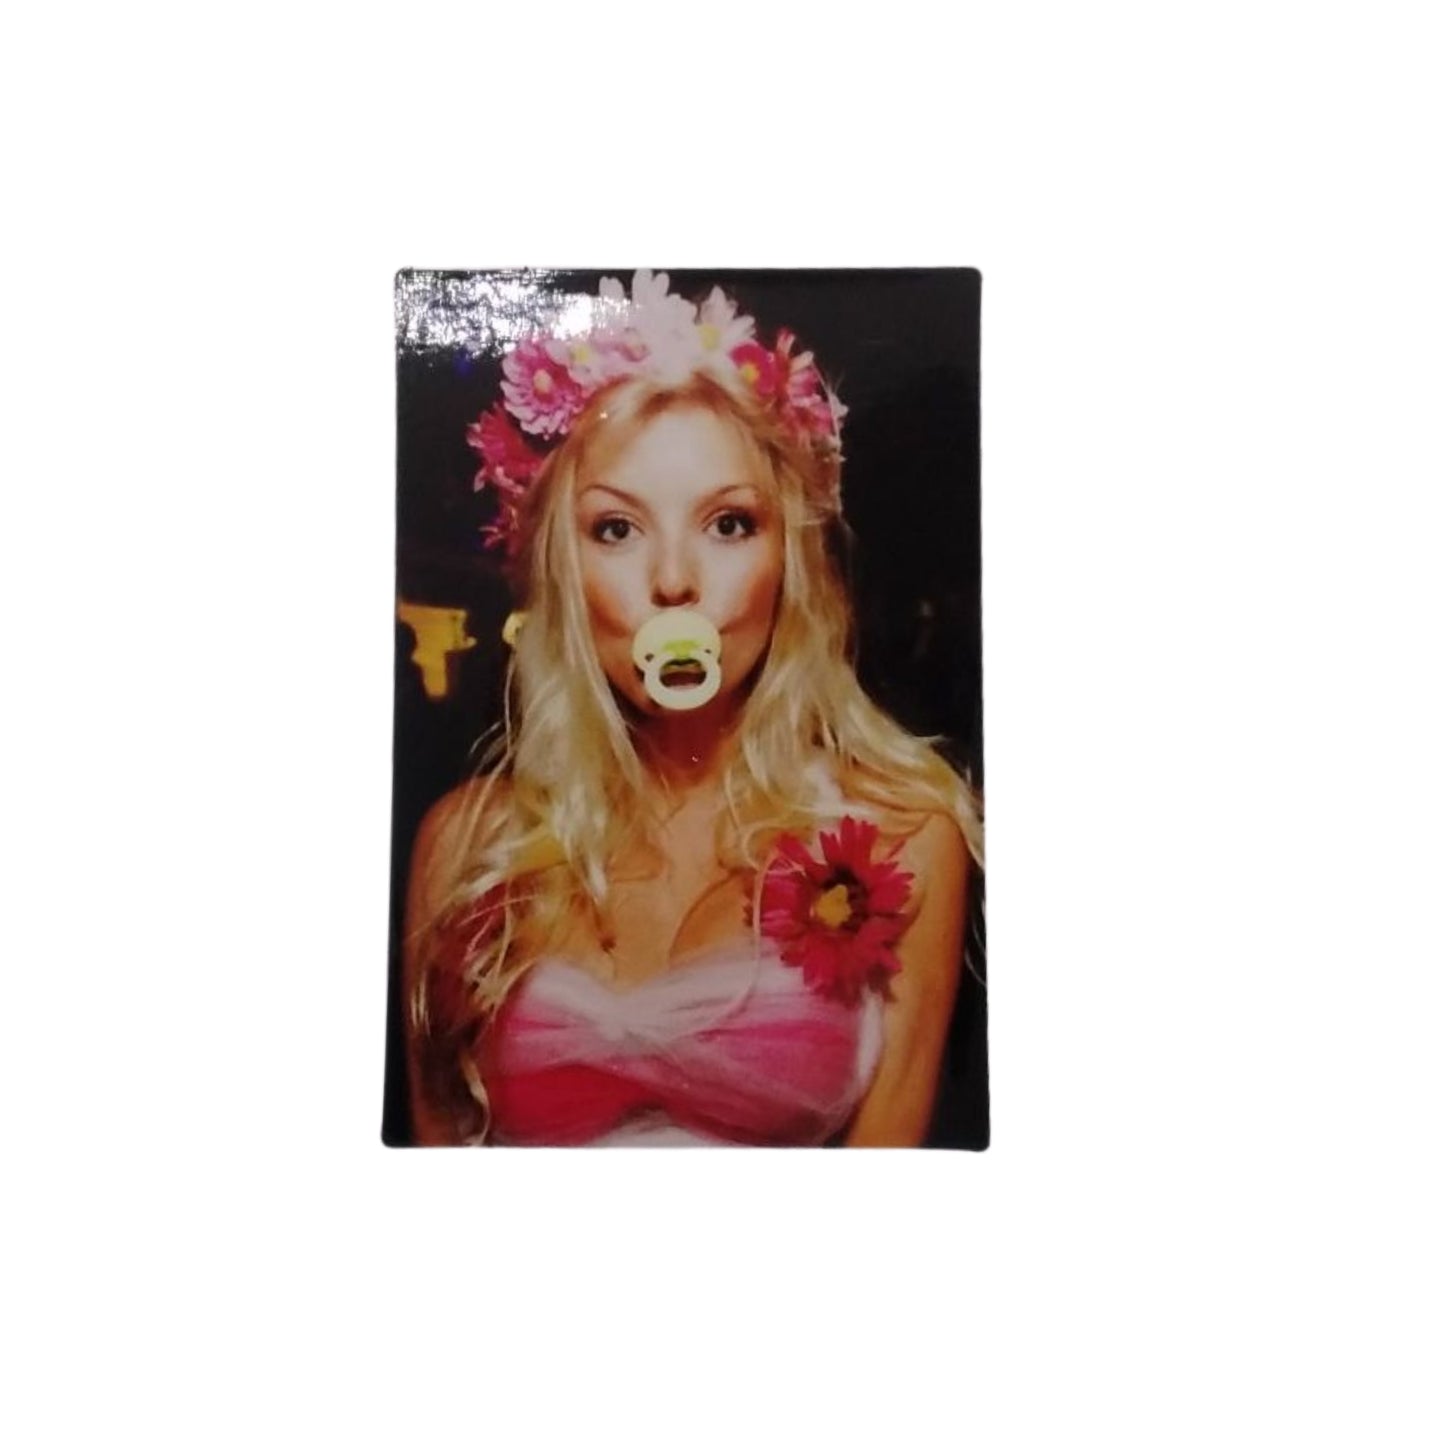 Blonde Women with Pacifier Wearing a Pink Flower Crown - Sticker